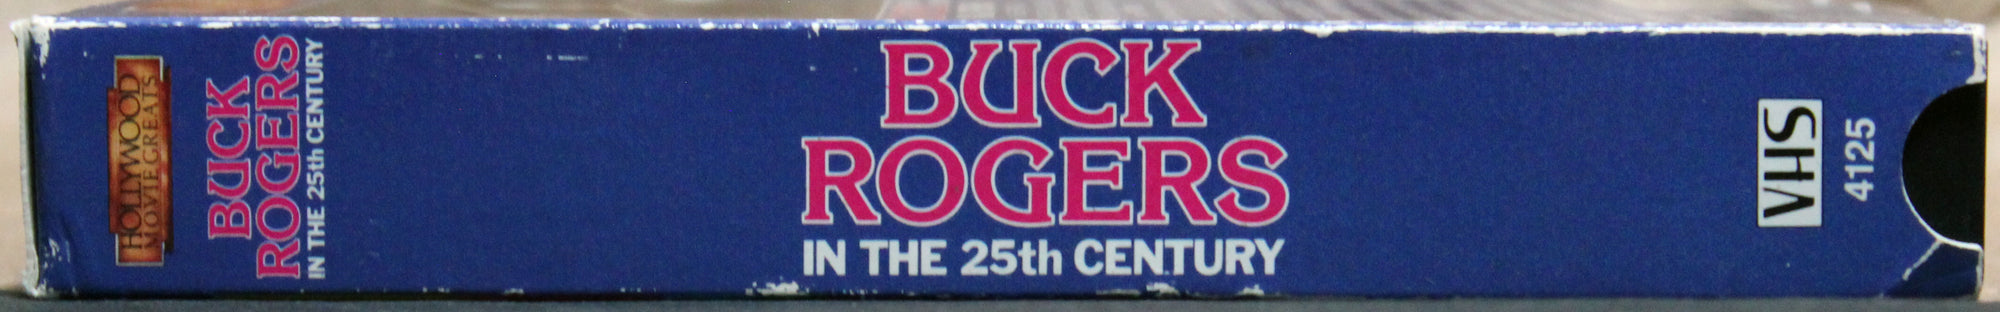 Buck-Rogers-Ardala-Returns-VHS